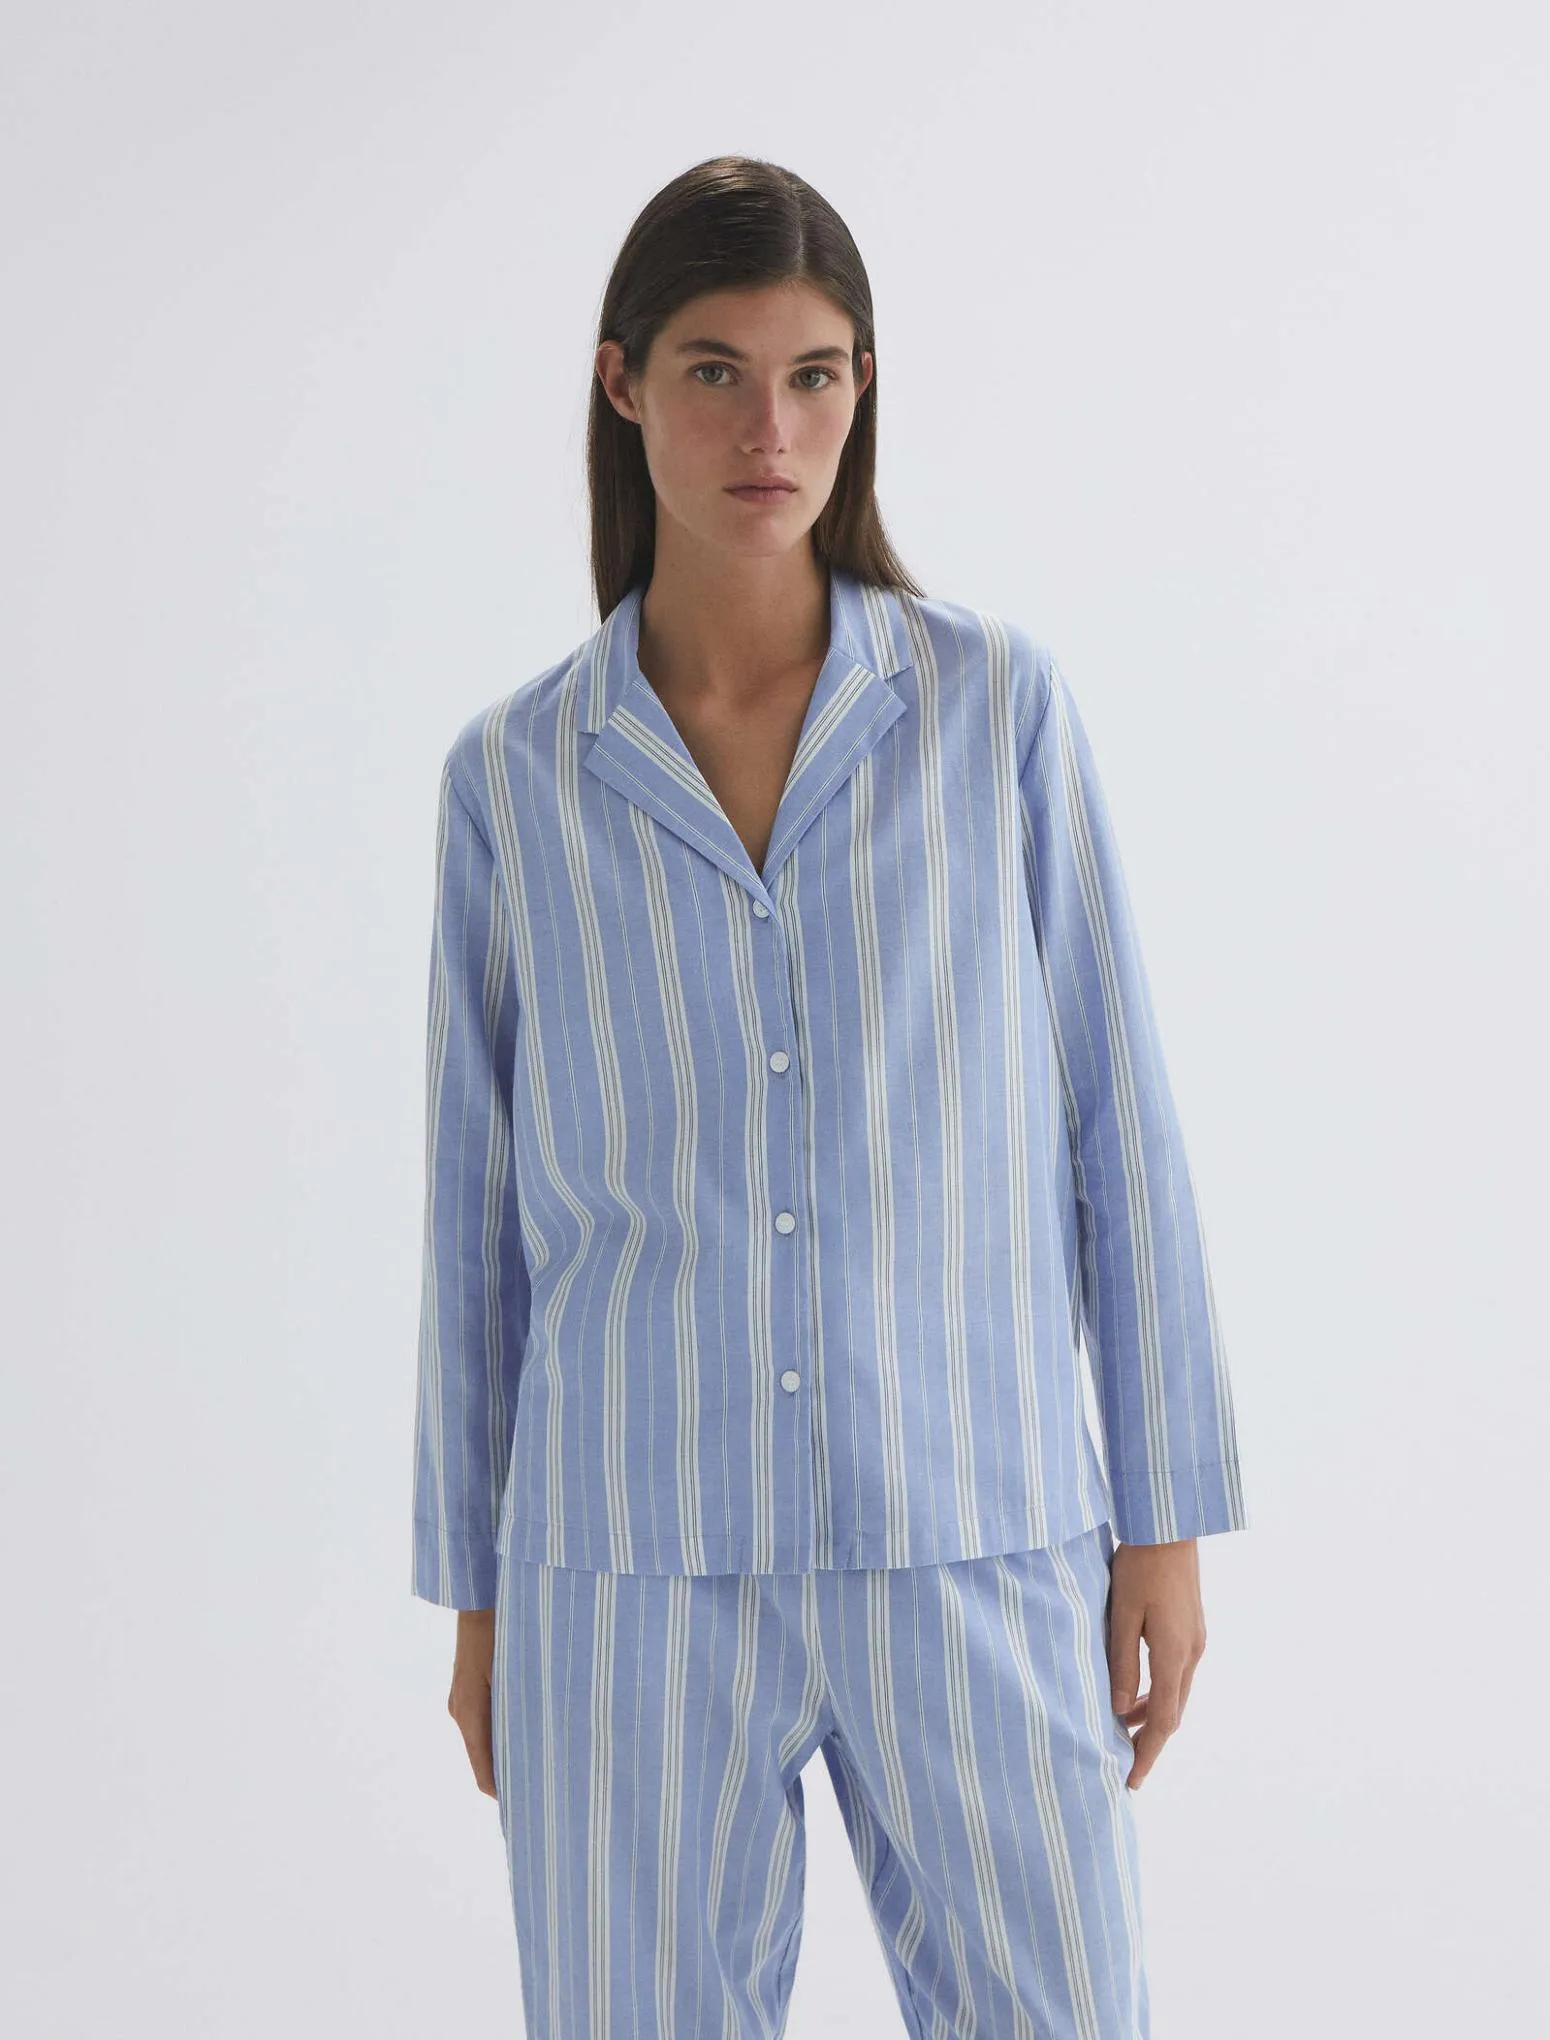 Catalogue Pyjamas et Homewear, page 00019